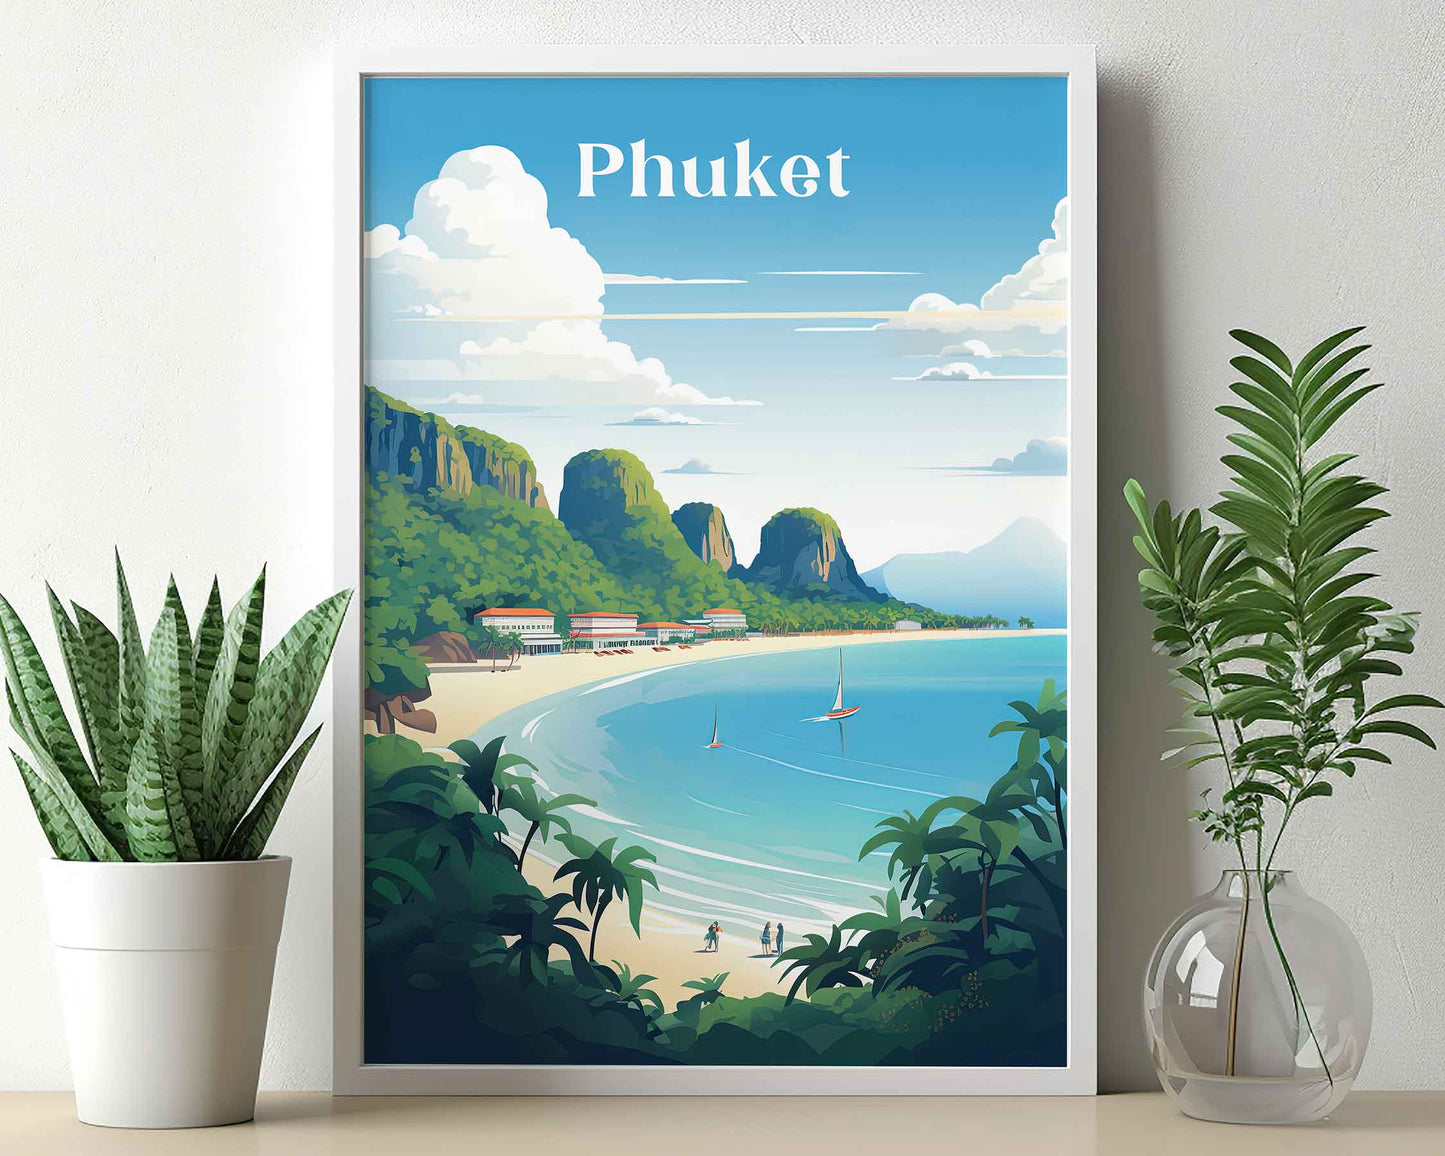 Framed Image of Phuket Thailand Travel Poster Wall Art Prints Illustration